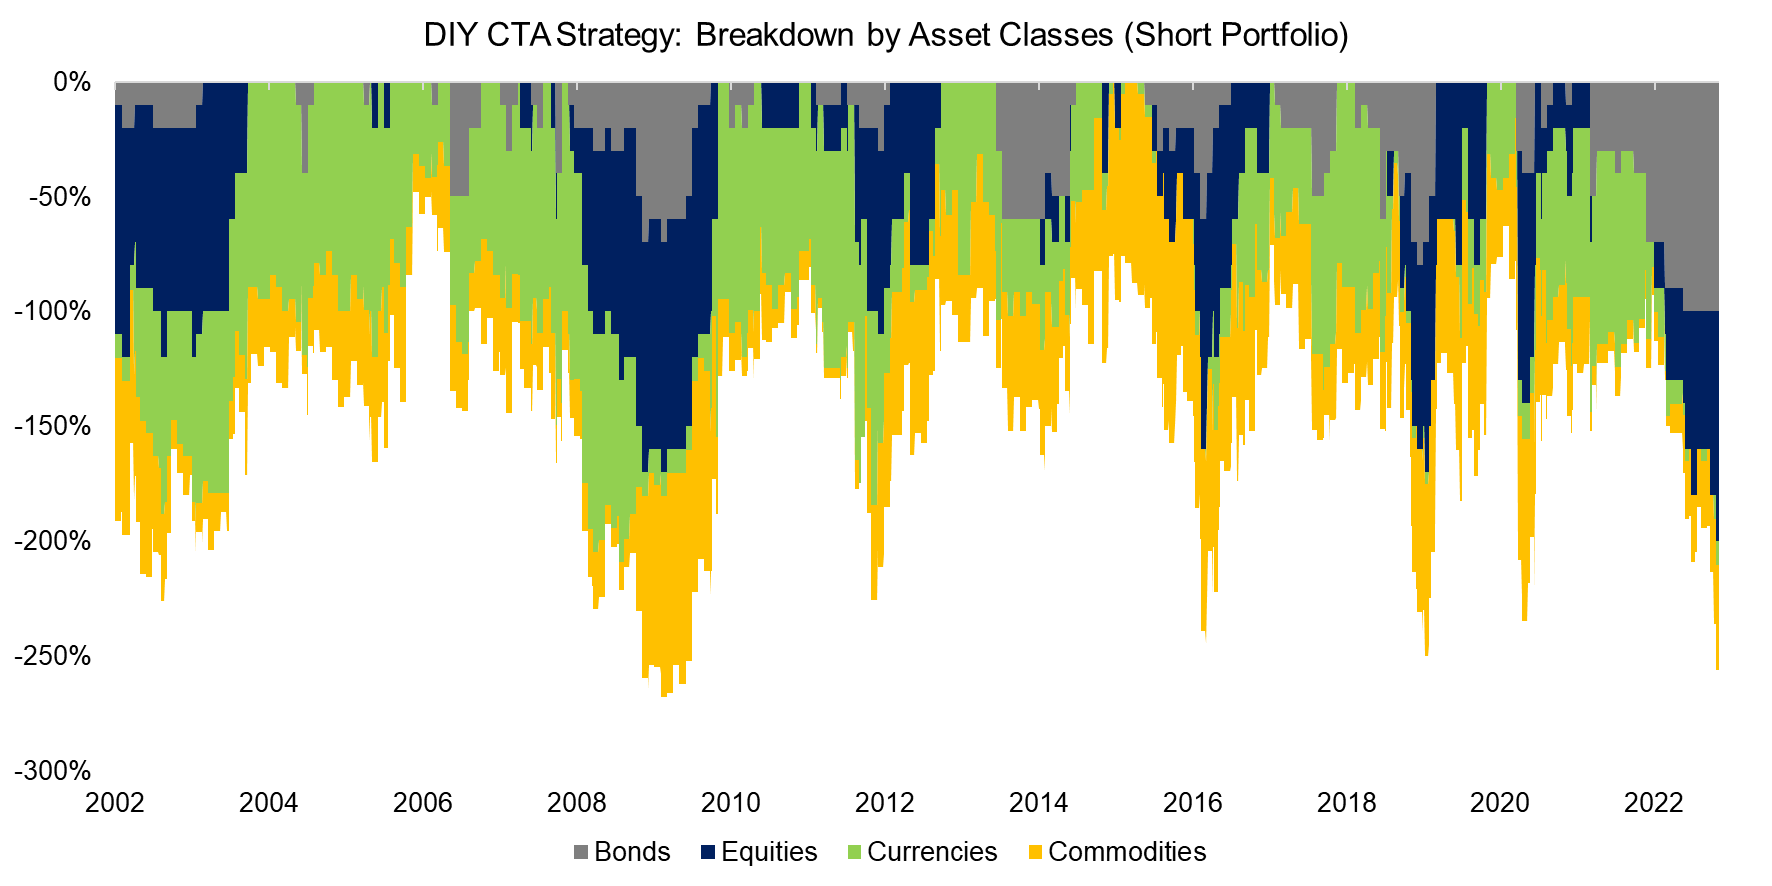 DIY CTA Strategy Breakdown by Asset Classes (Short Portfolio)